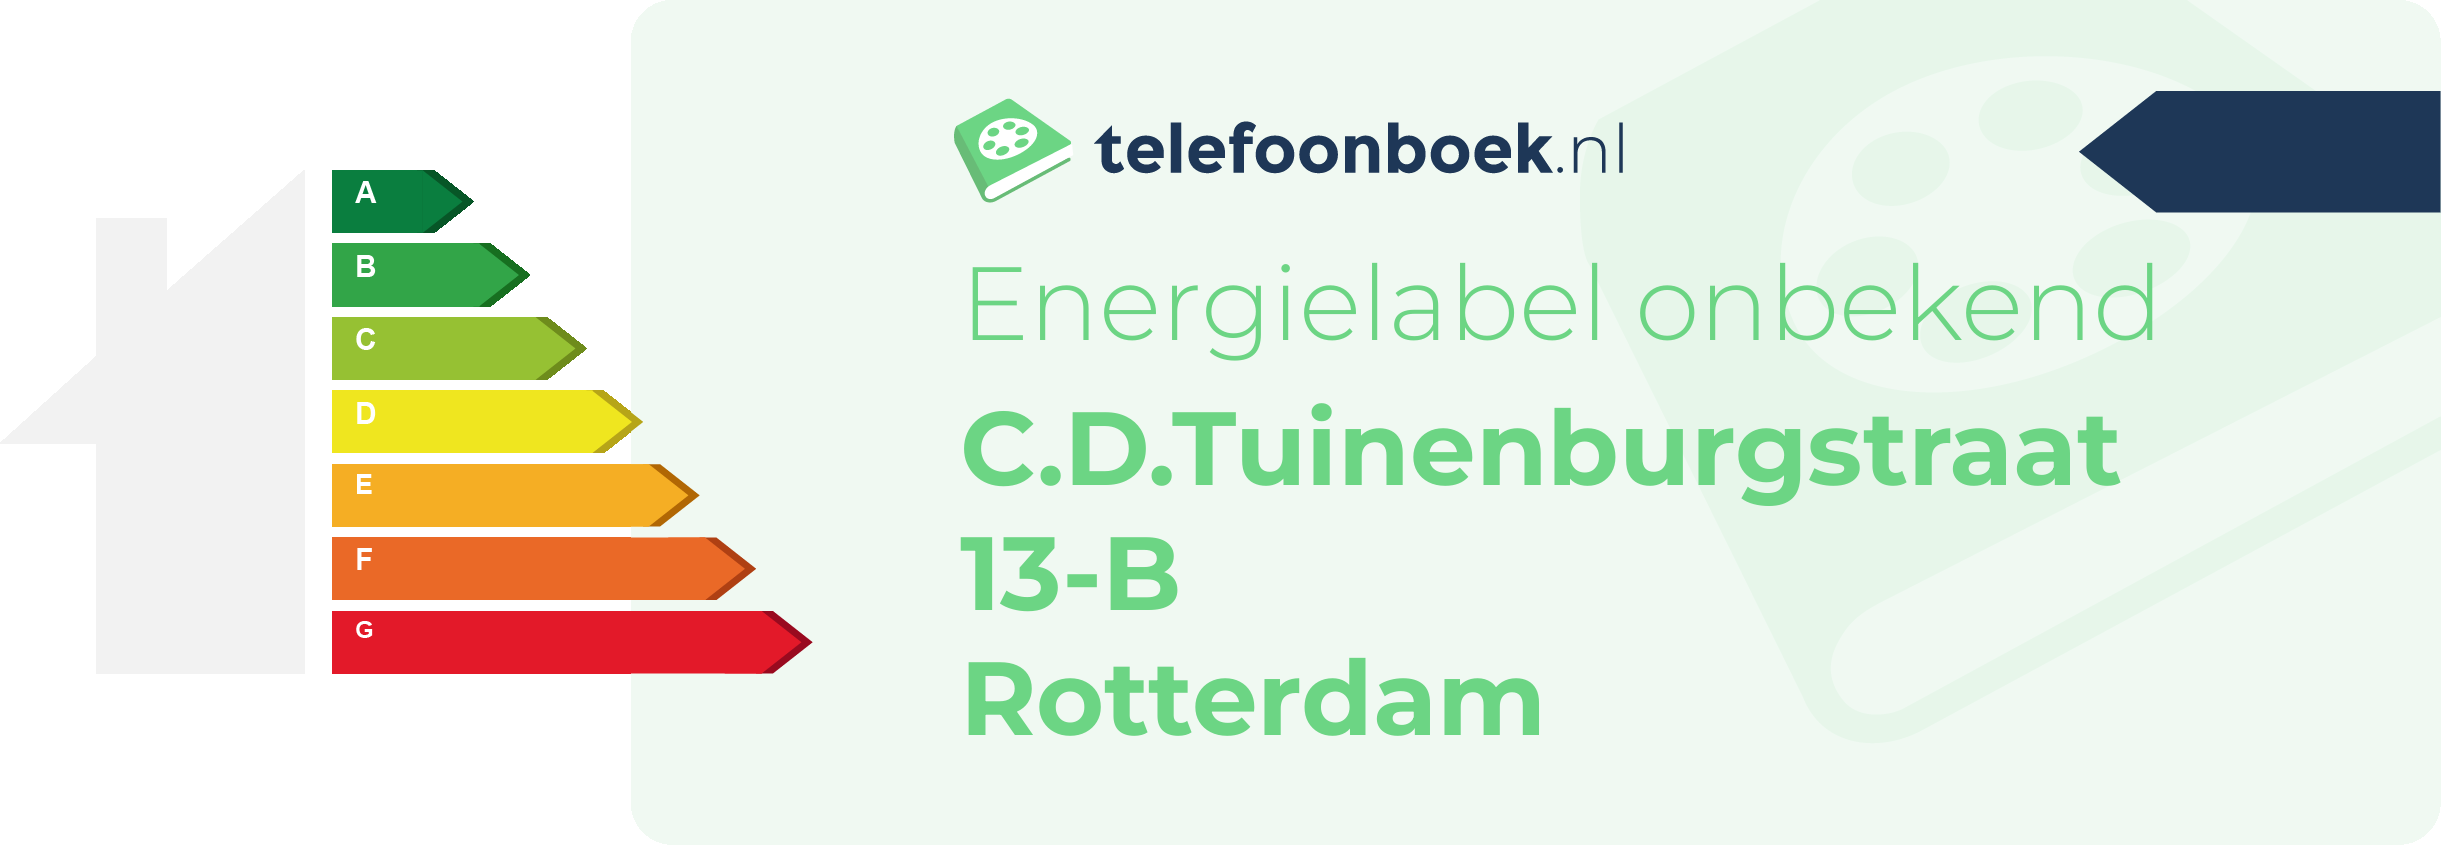 Energielabel C.D.Tuinenburgstraat 13-B Rotterdam